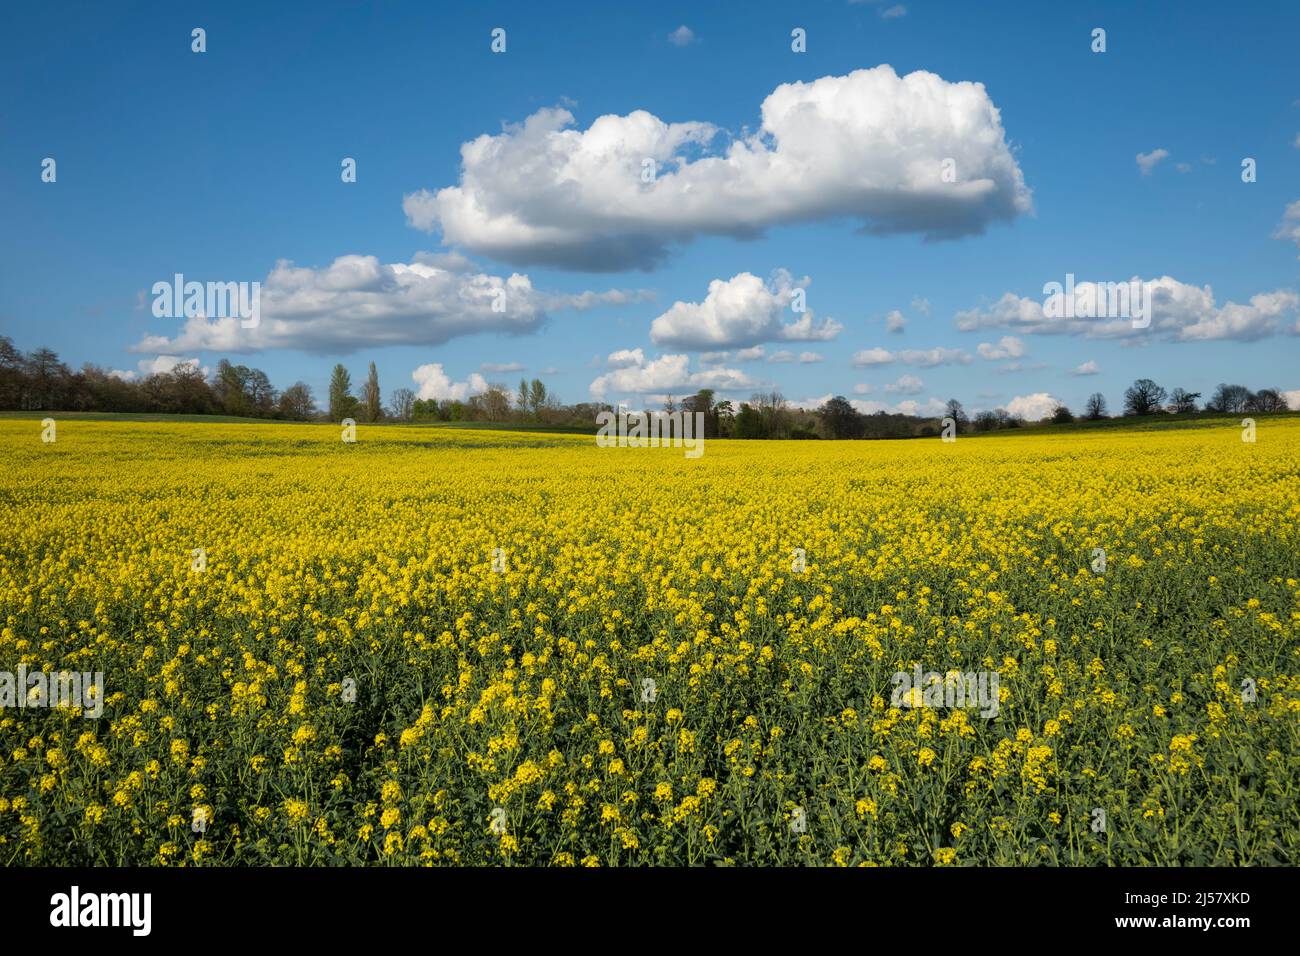 Oilseed rape field below fluffy white clouds on a blue sky, Newbury, Berkshire, England, United Kingdom, Europe Stock Photo